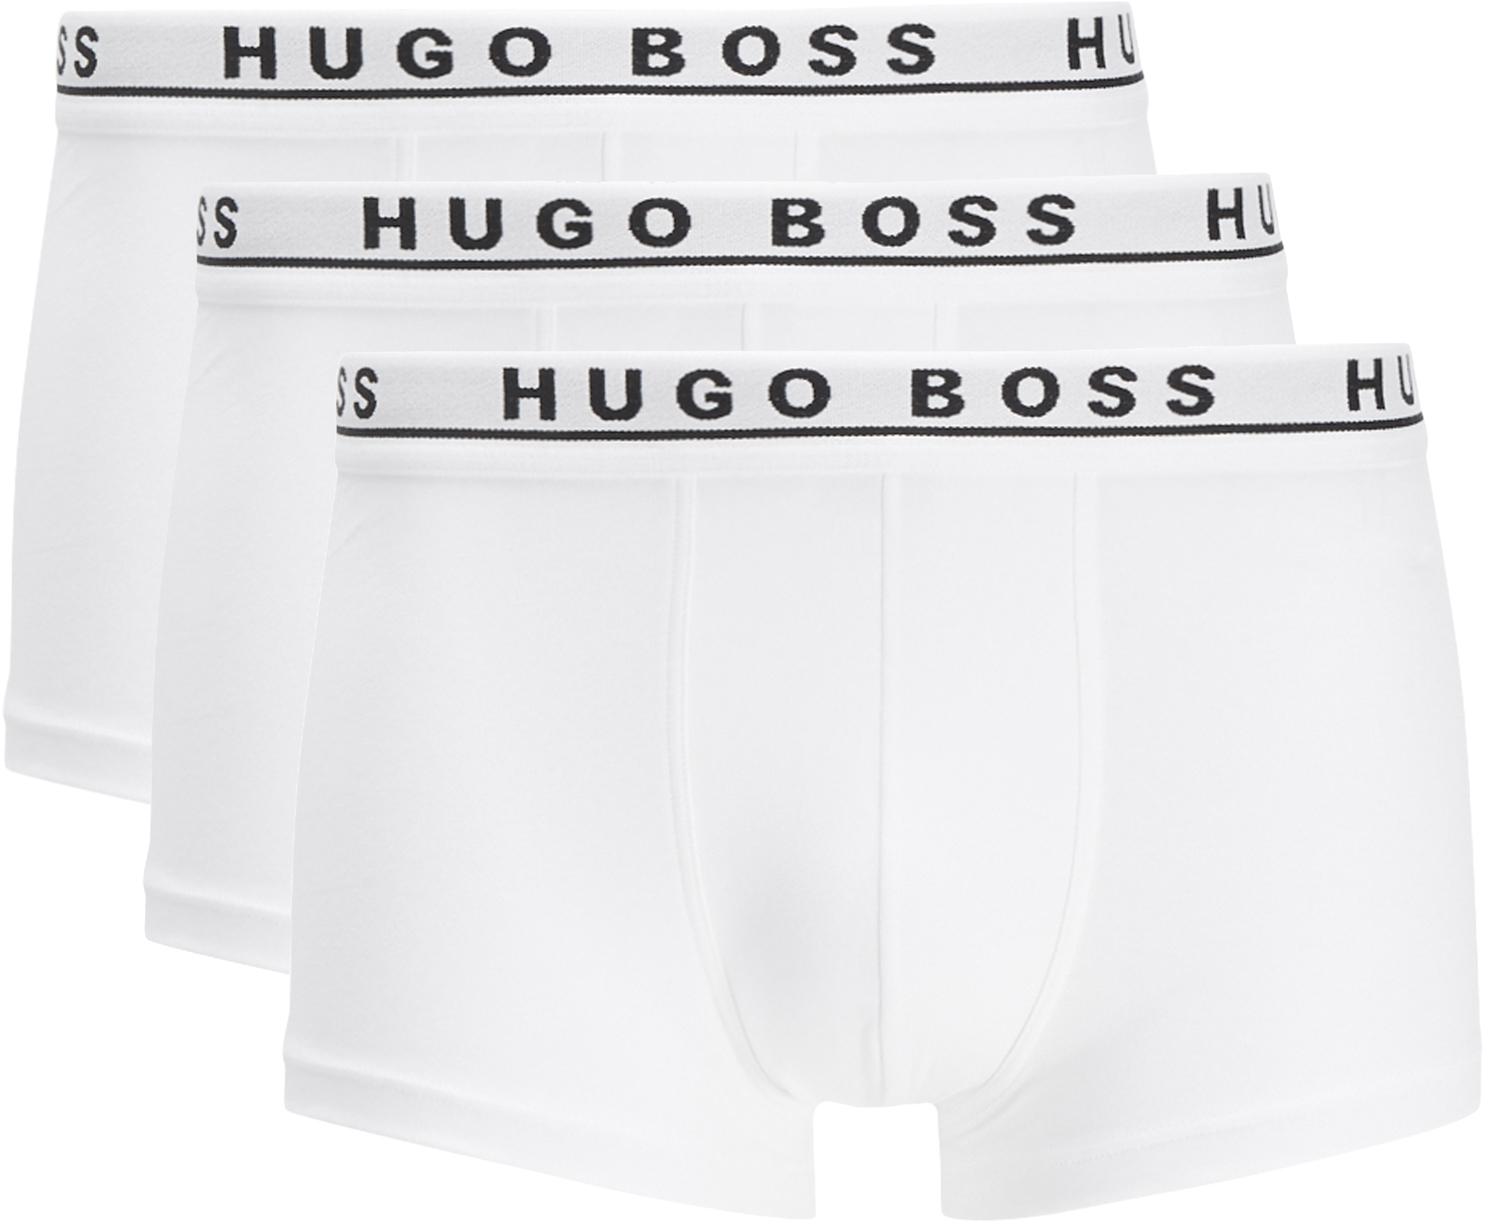 Hugo Boss Size Chart